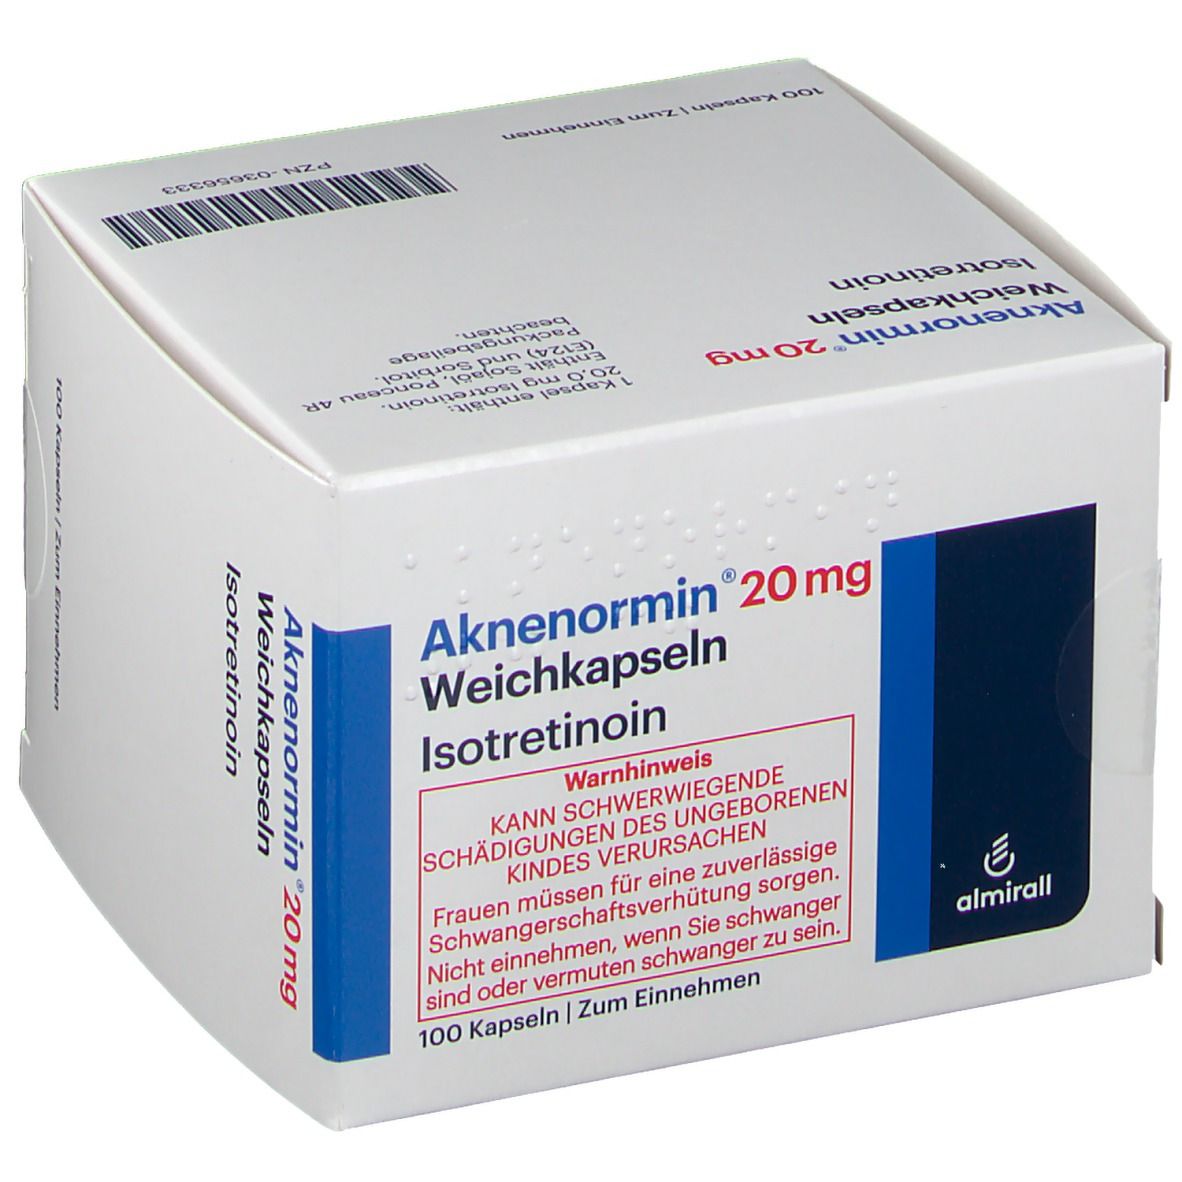 Aknenormin® 20 mg